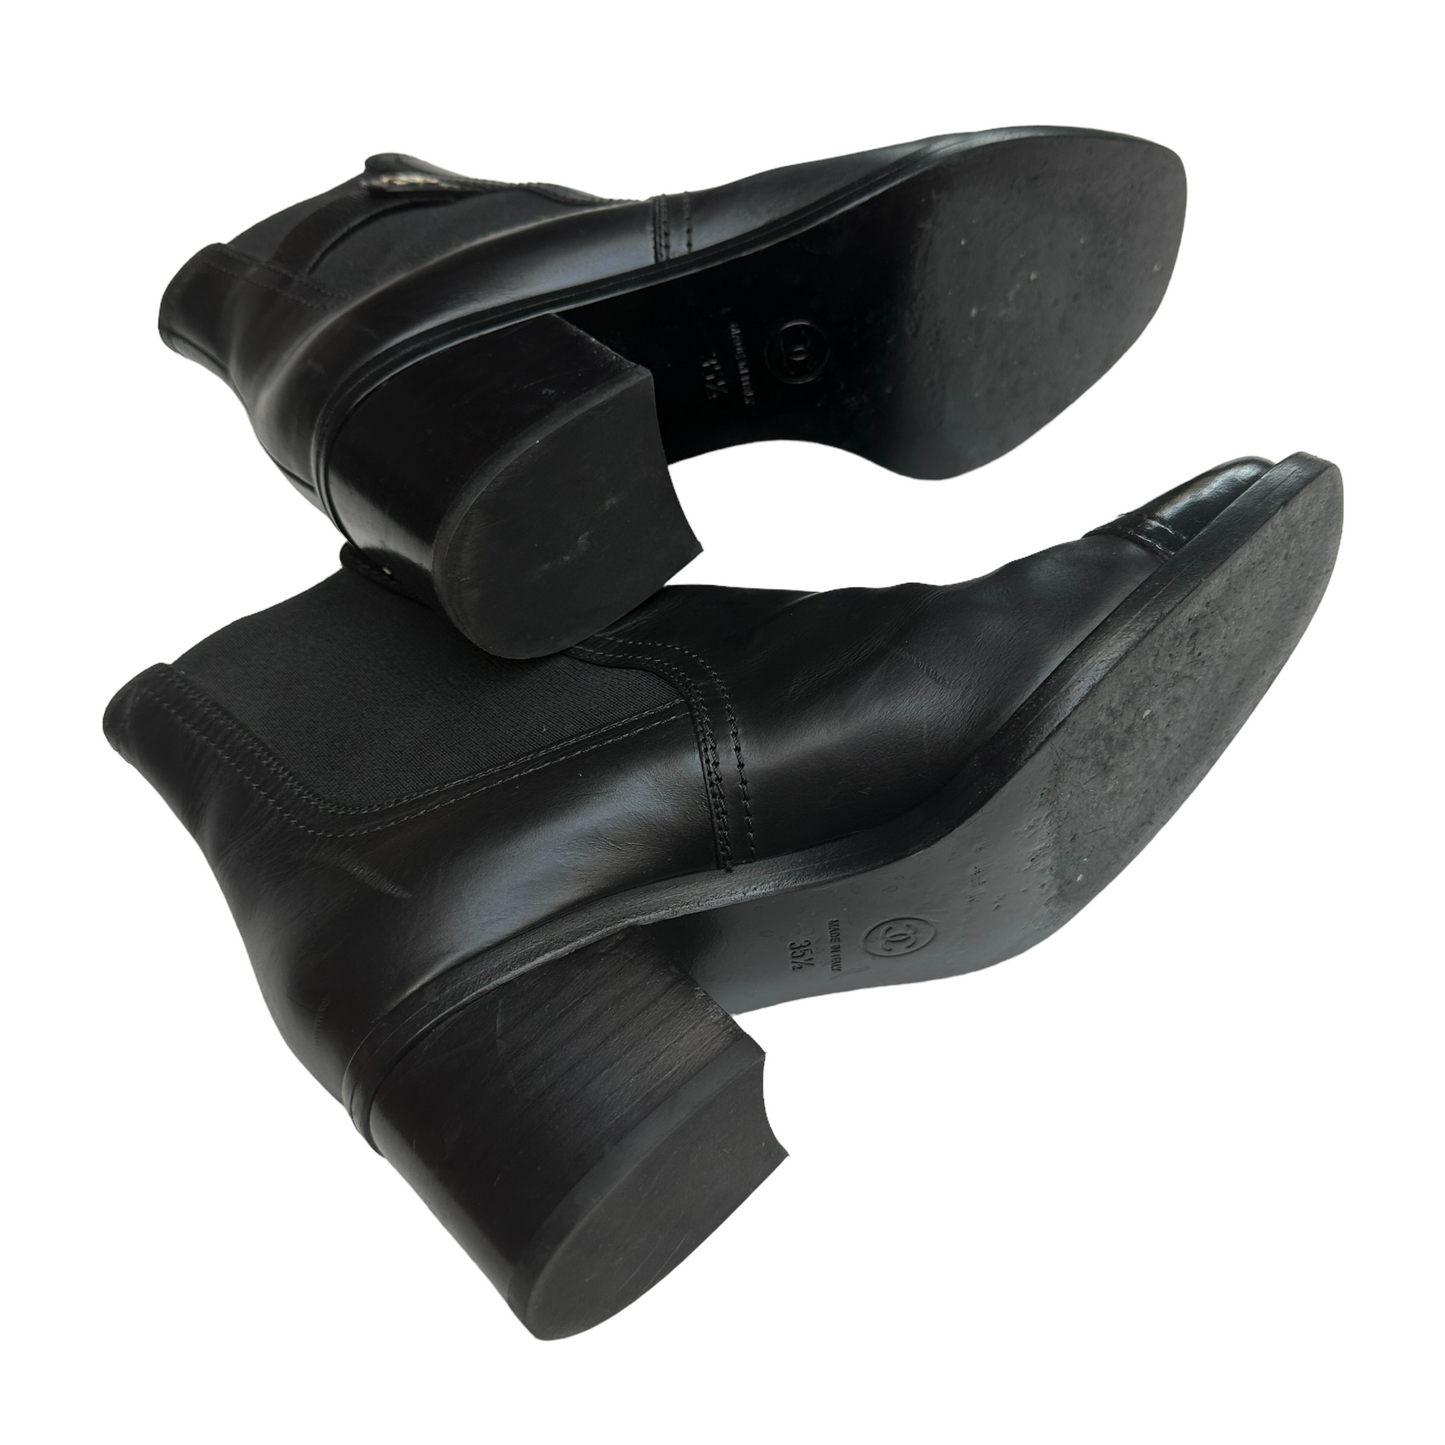 Black Classic Boots - 5.5